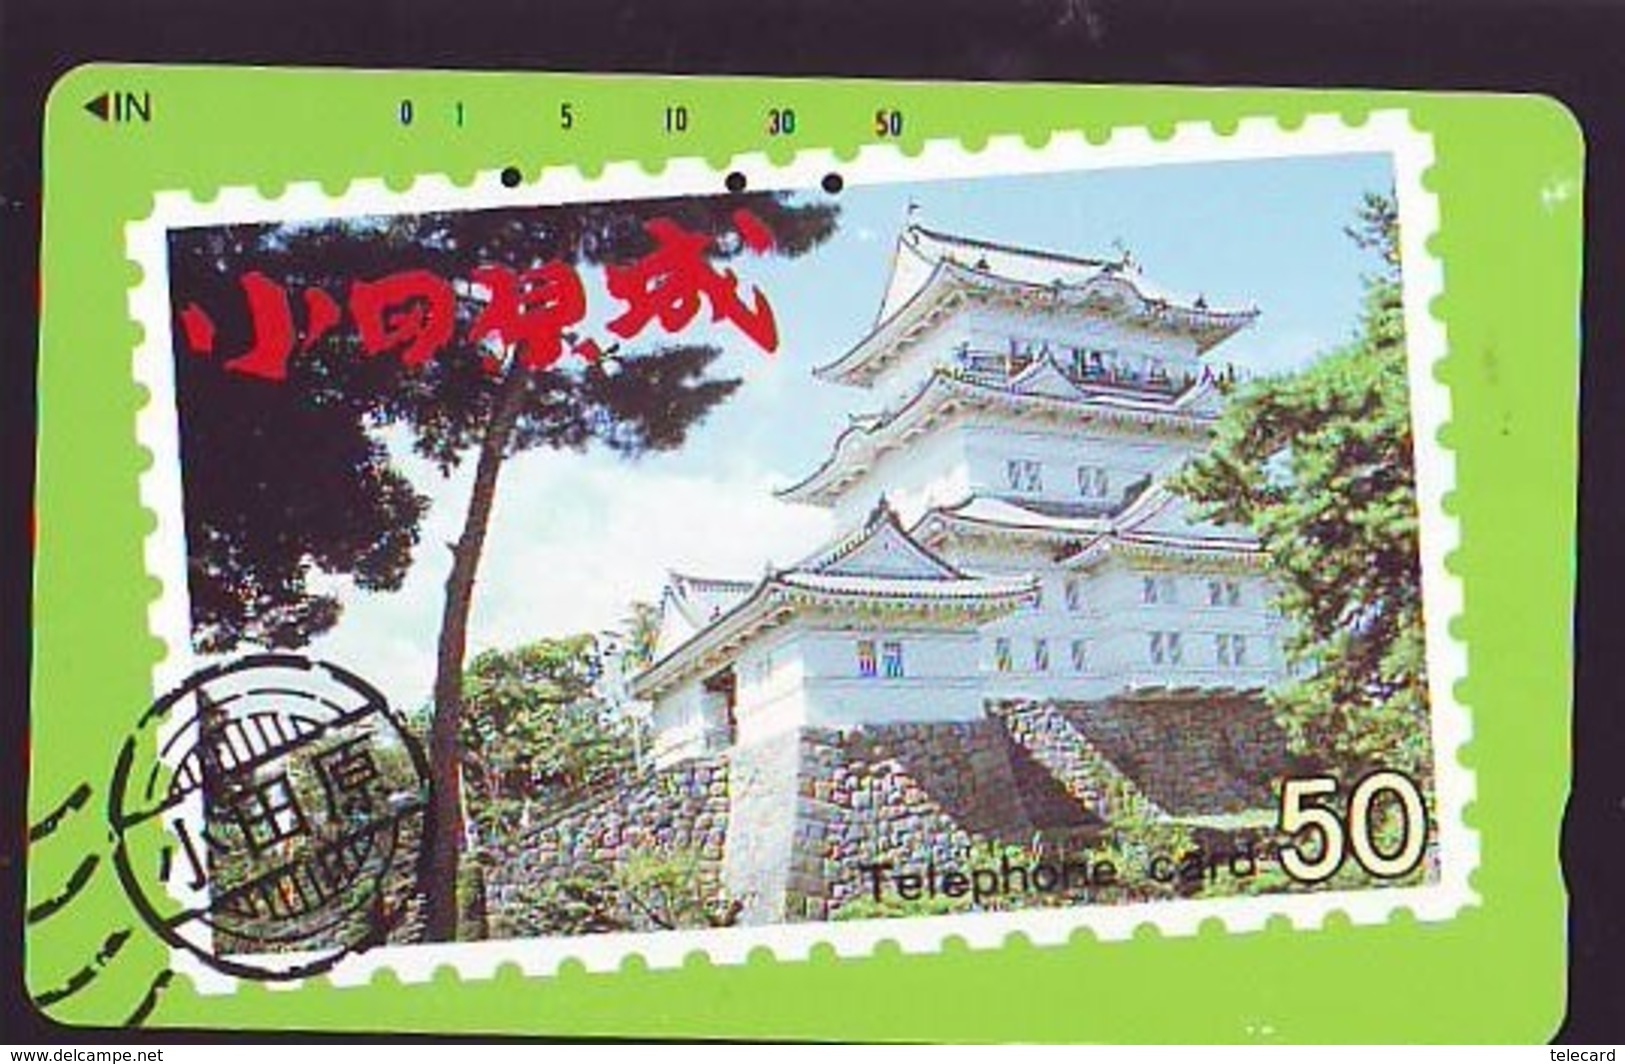 Télécarte Japon * Stamp & Phonecard On Japan Phonecard (304)  Timbre + Télécarte *  Briefmarke & TK - Briefmarken & Münzen